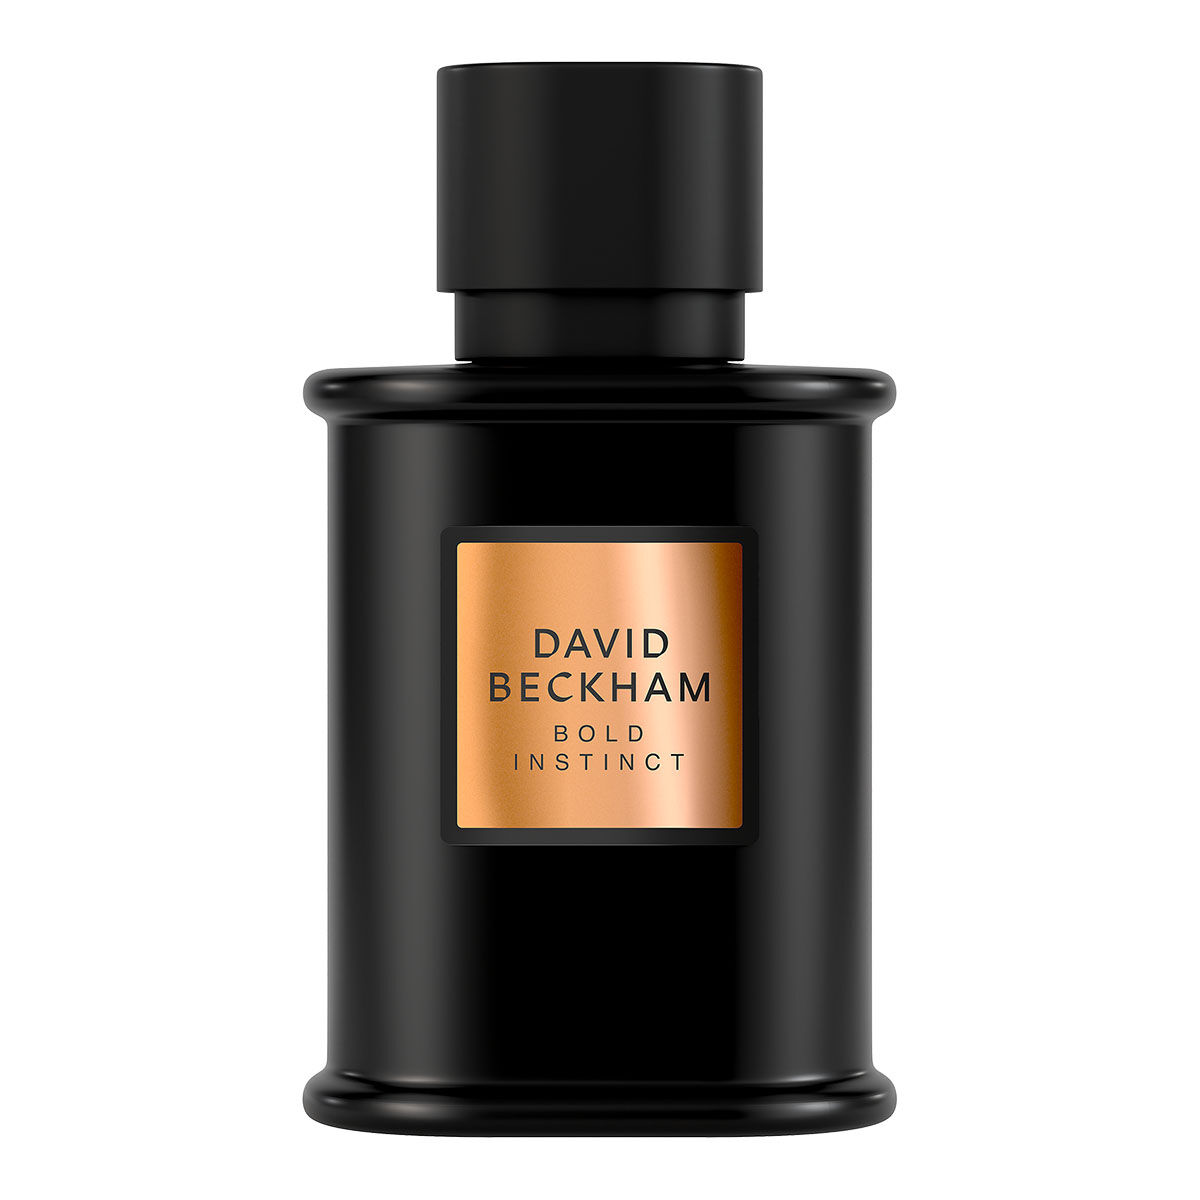 Мужская парфюмированная вода David Beckham Bold Instinct, 50 мл туалетная вода david beckham bold instinct 50 мл